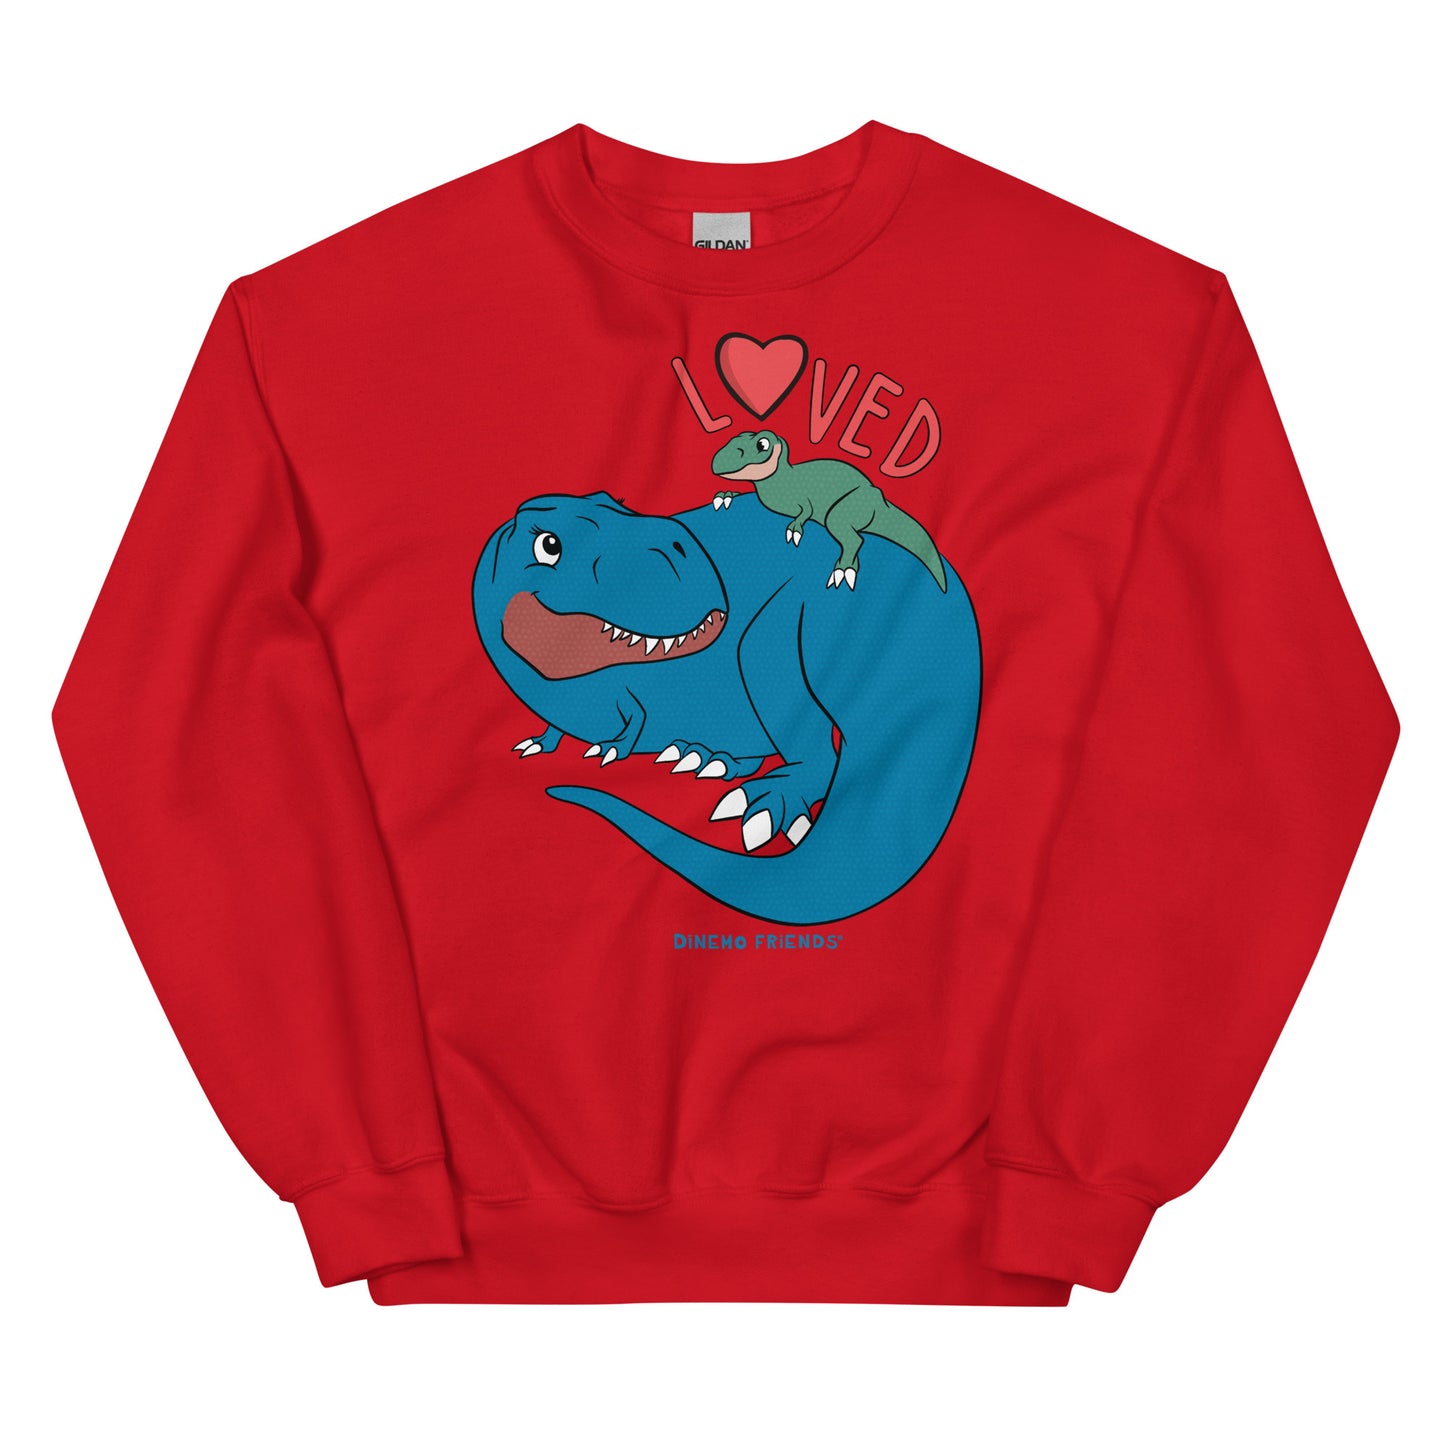 Loved Dino Sweatshirt